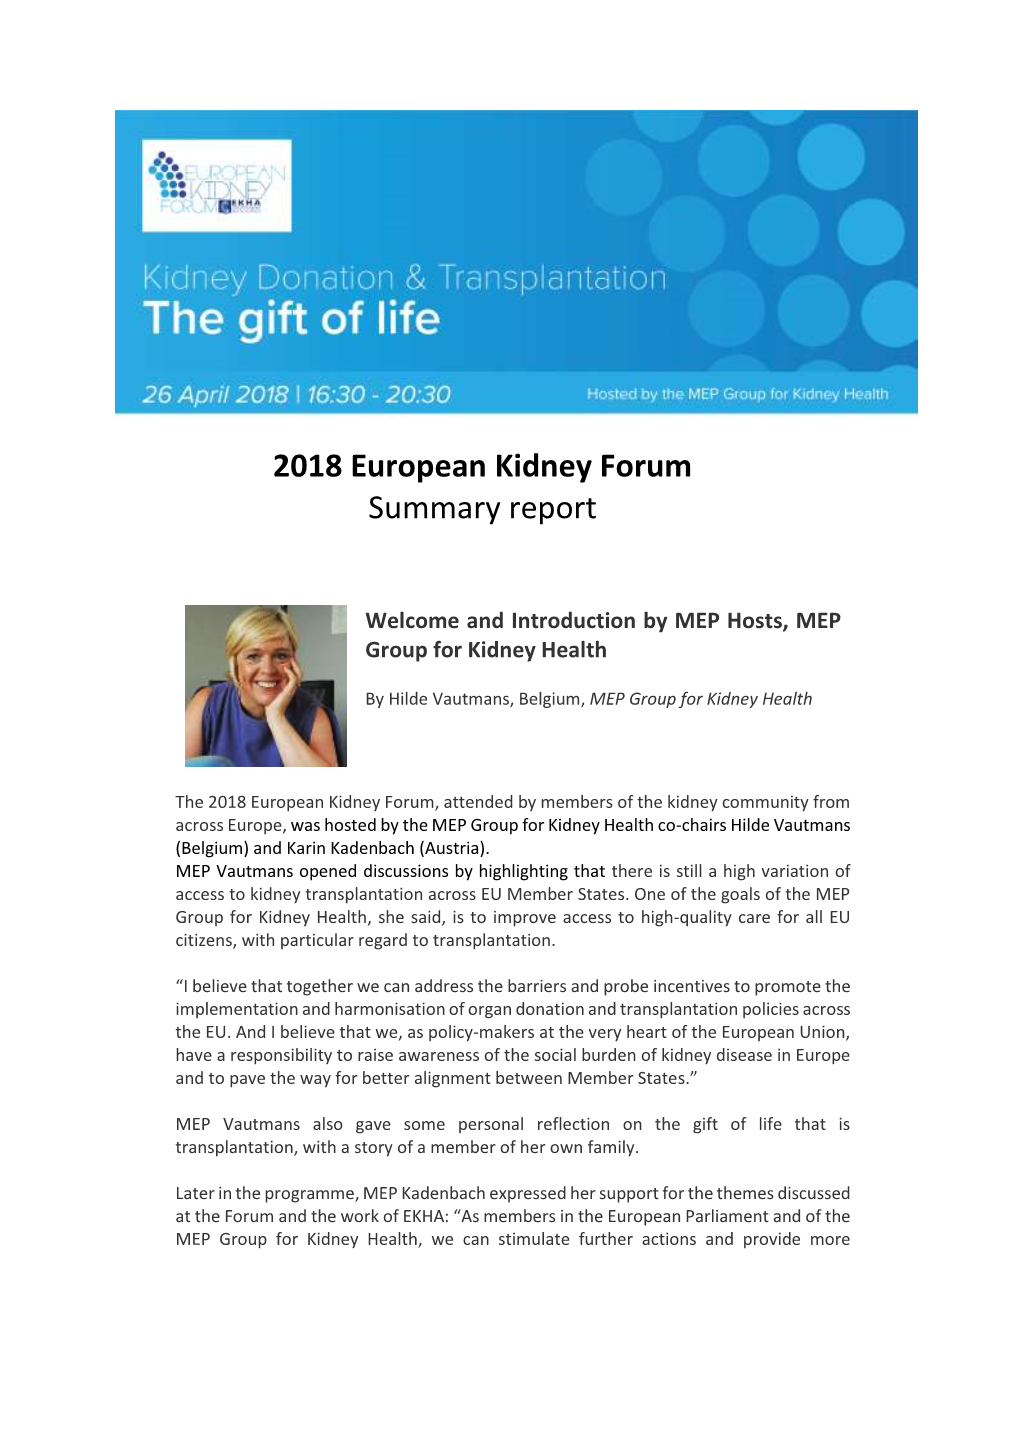 2018 European Kidney Forum Summary Report